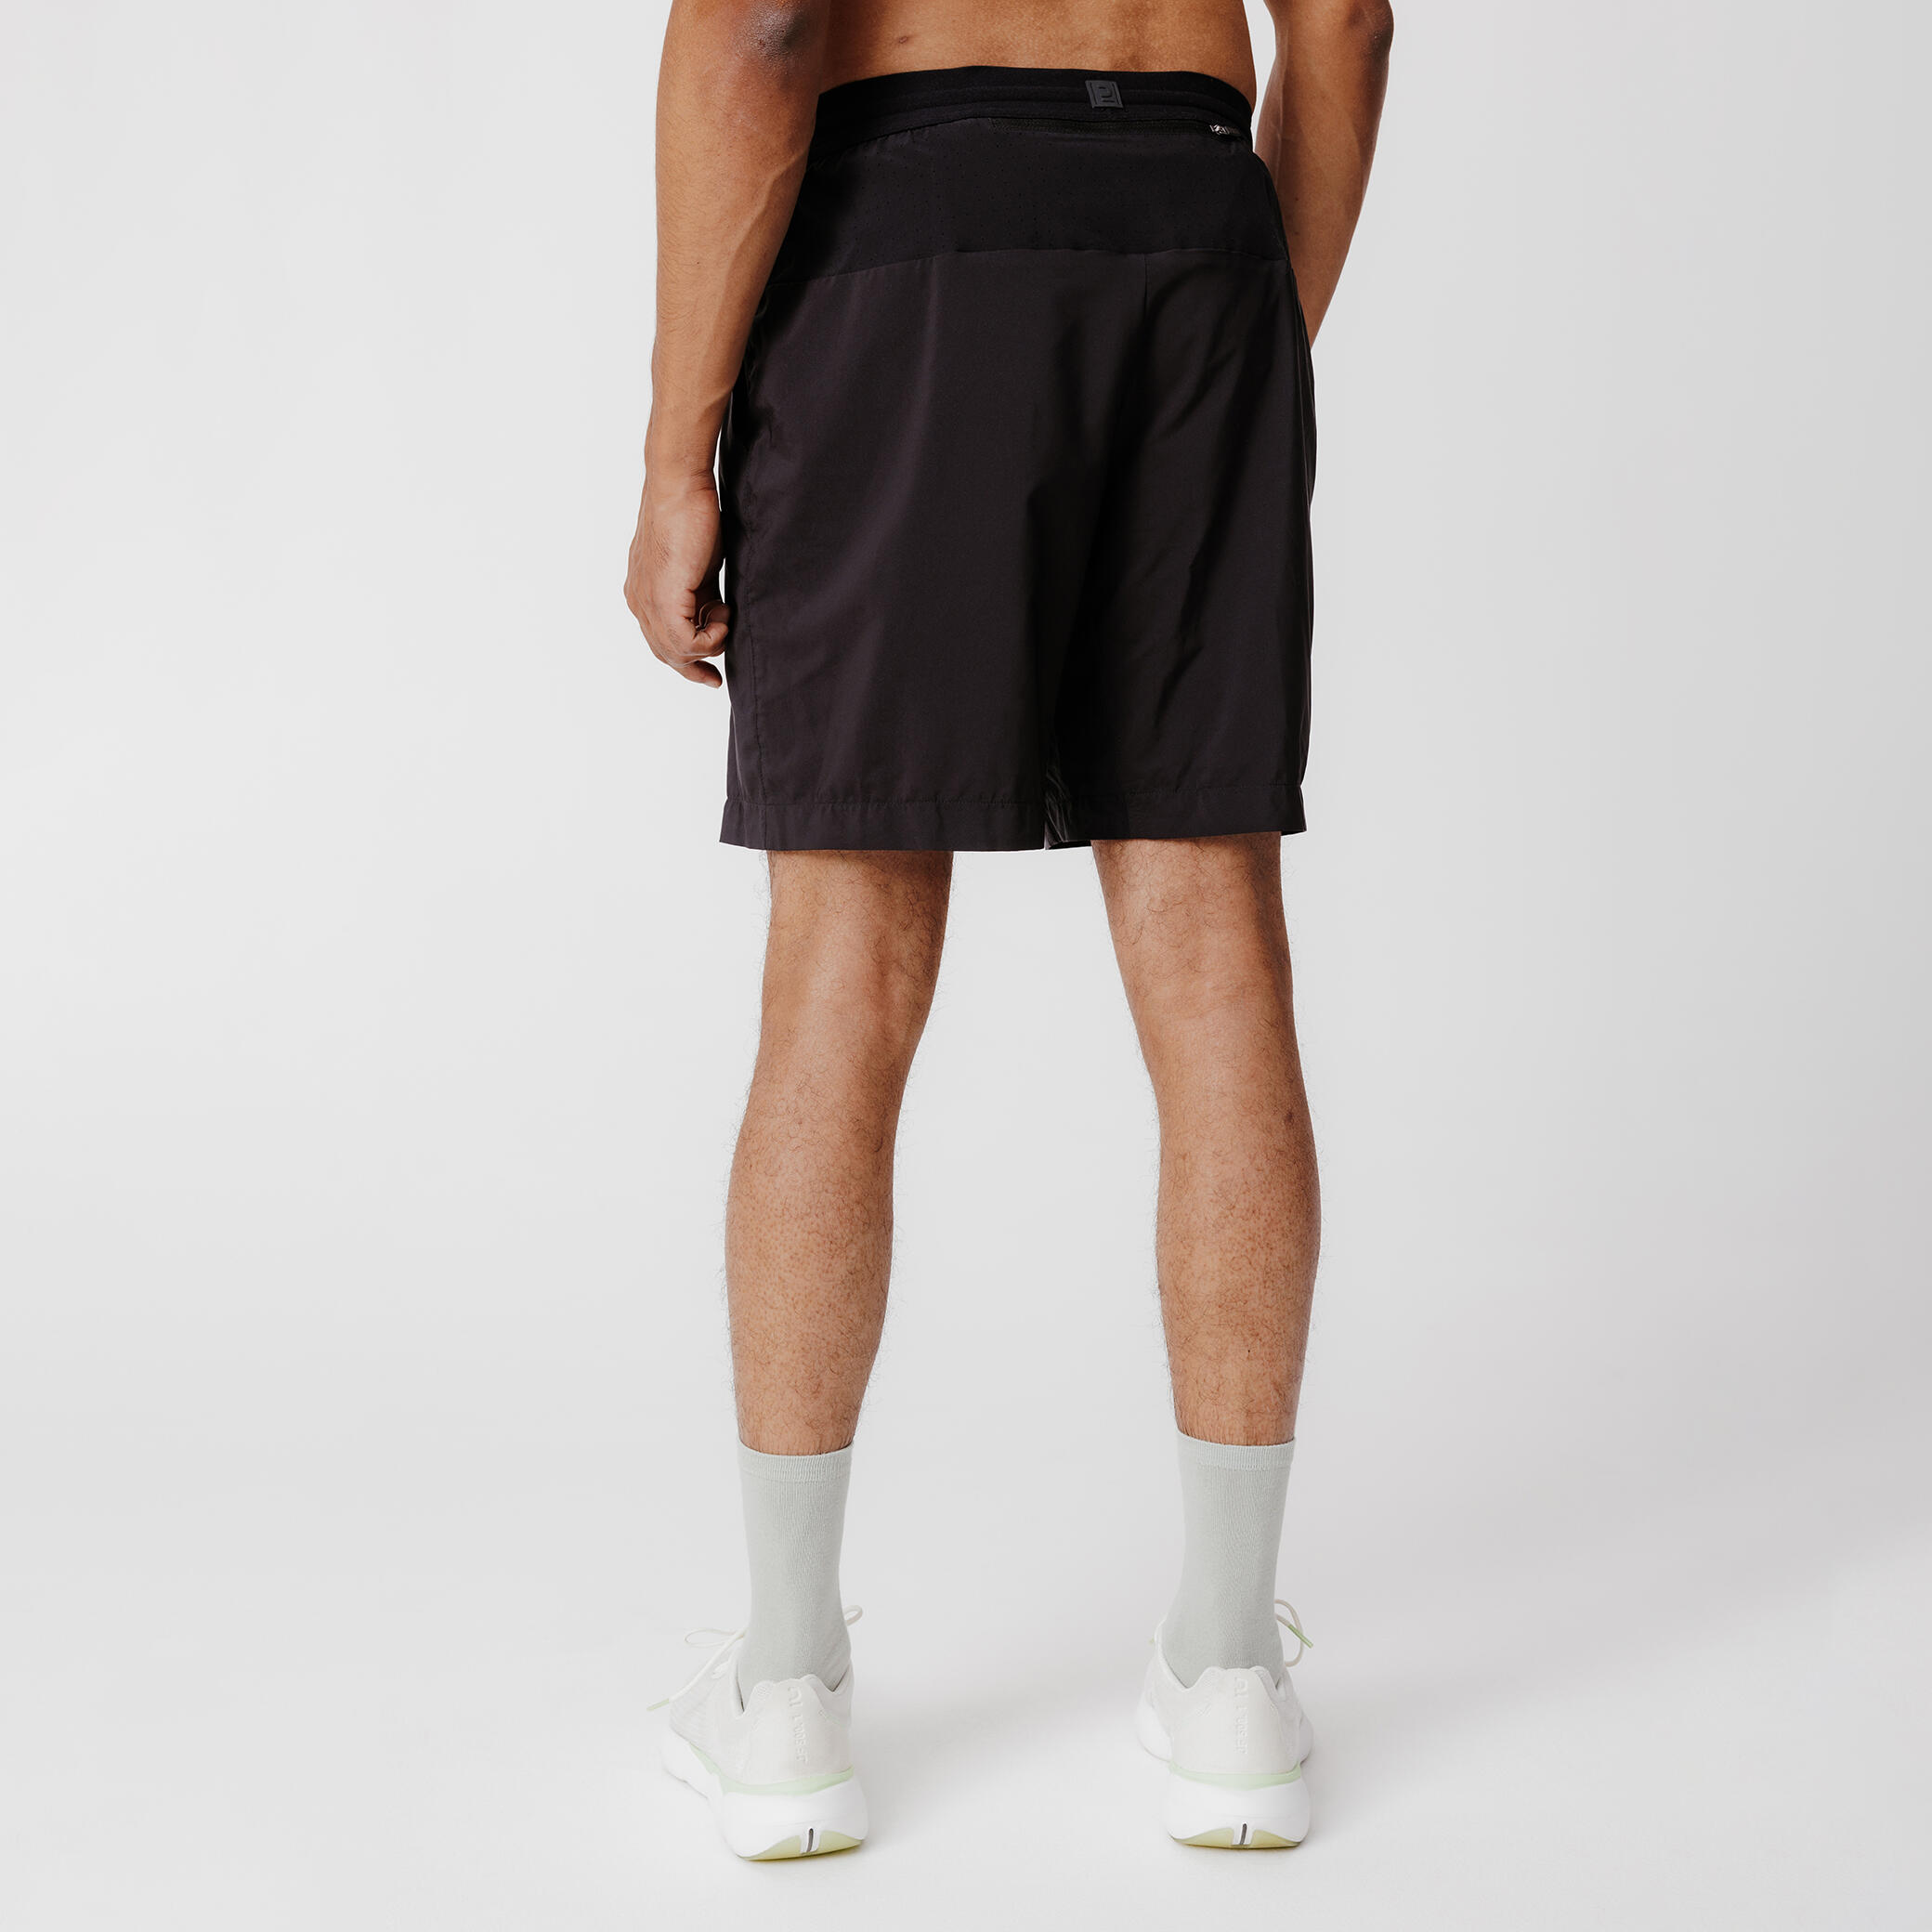 Men's 2-in-1 Breathable Running Shorts - Run Dry 550 Black - Black